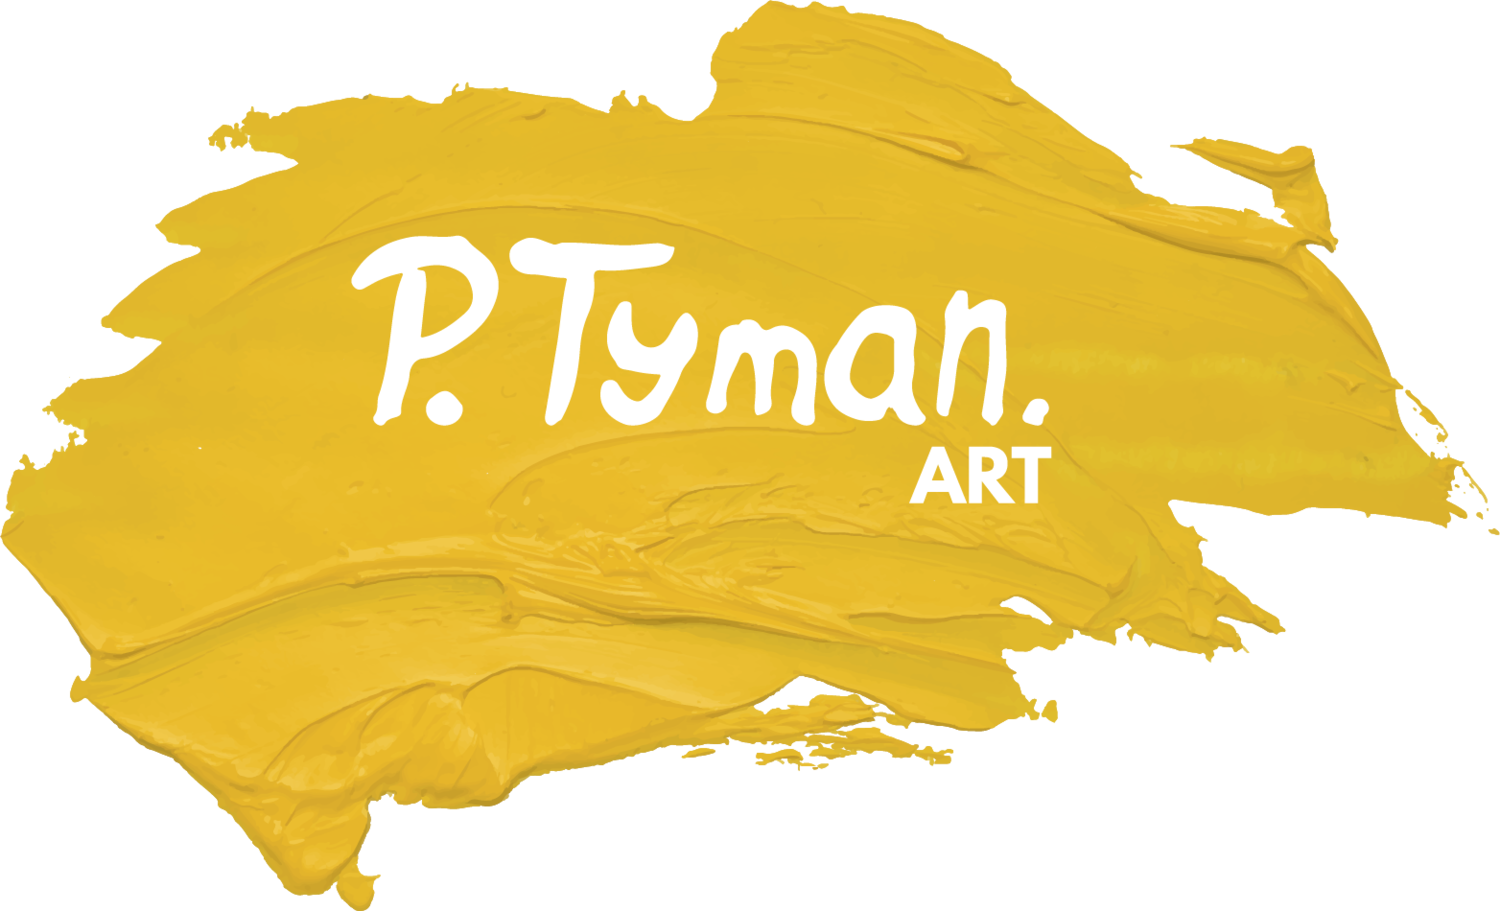 Patrick Tyman Art